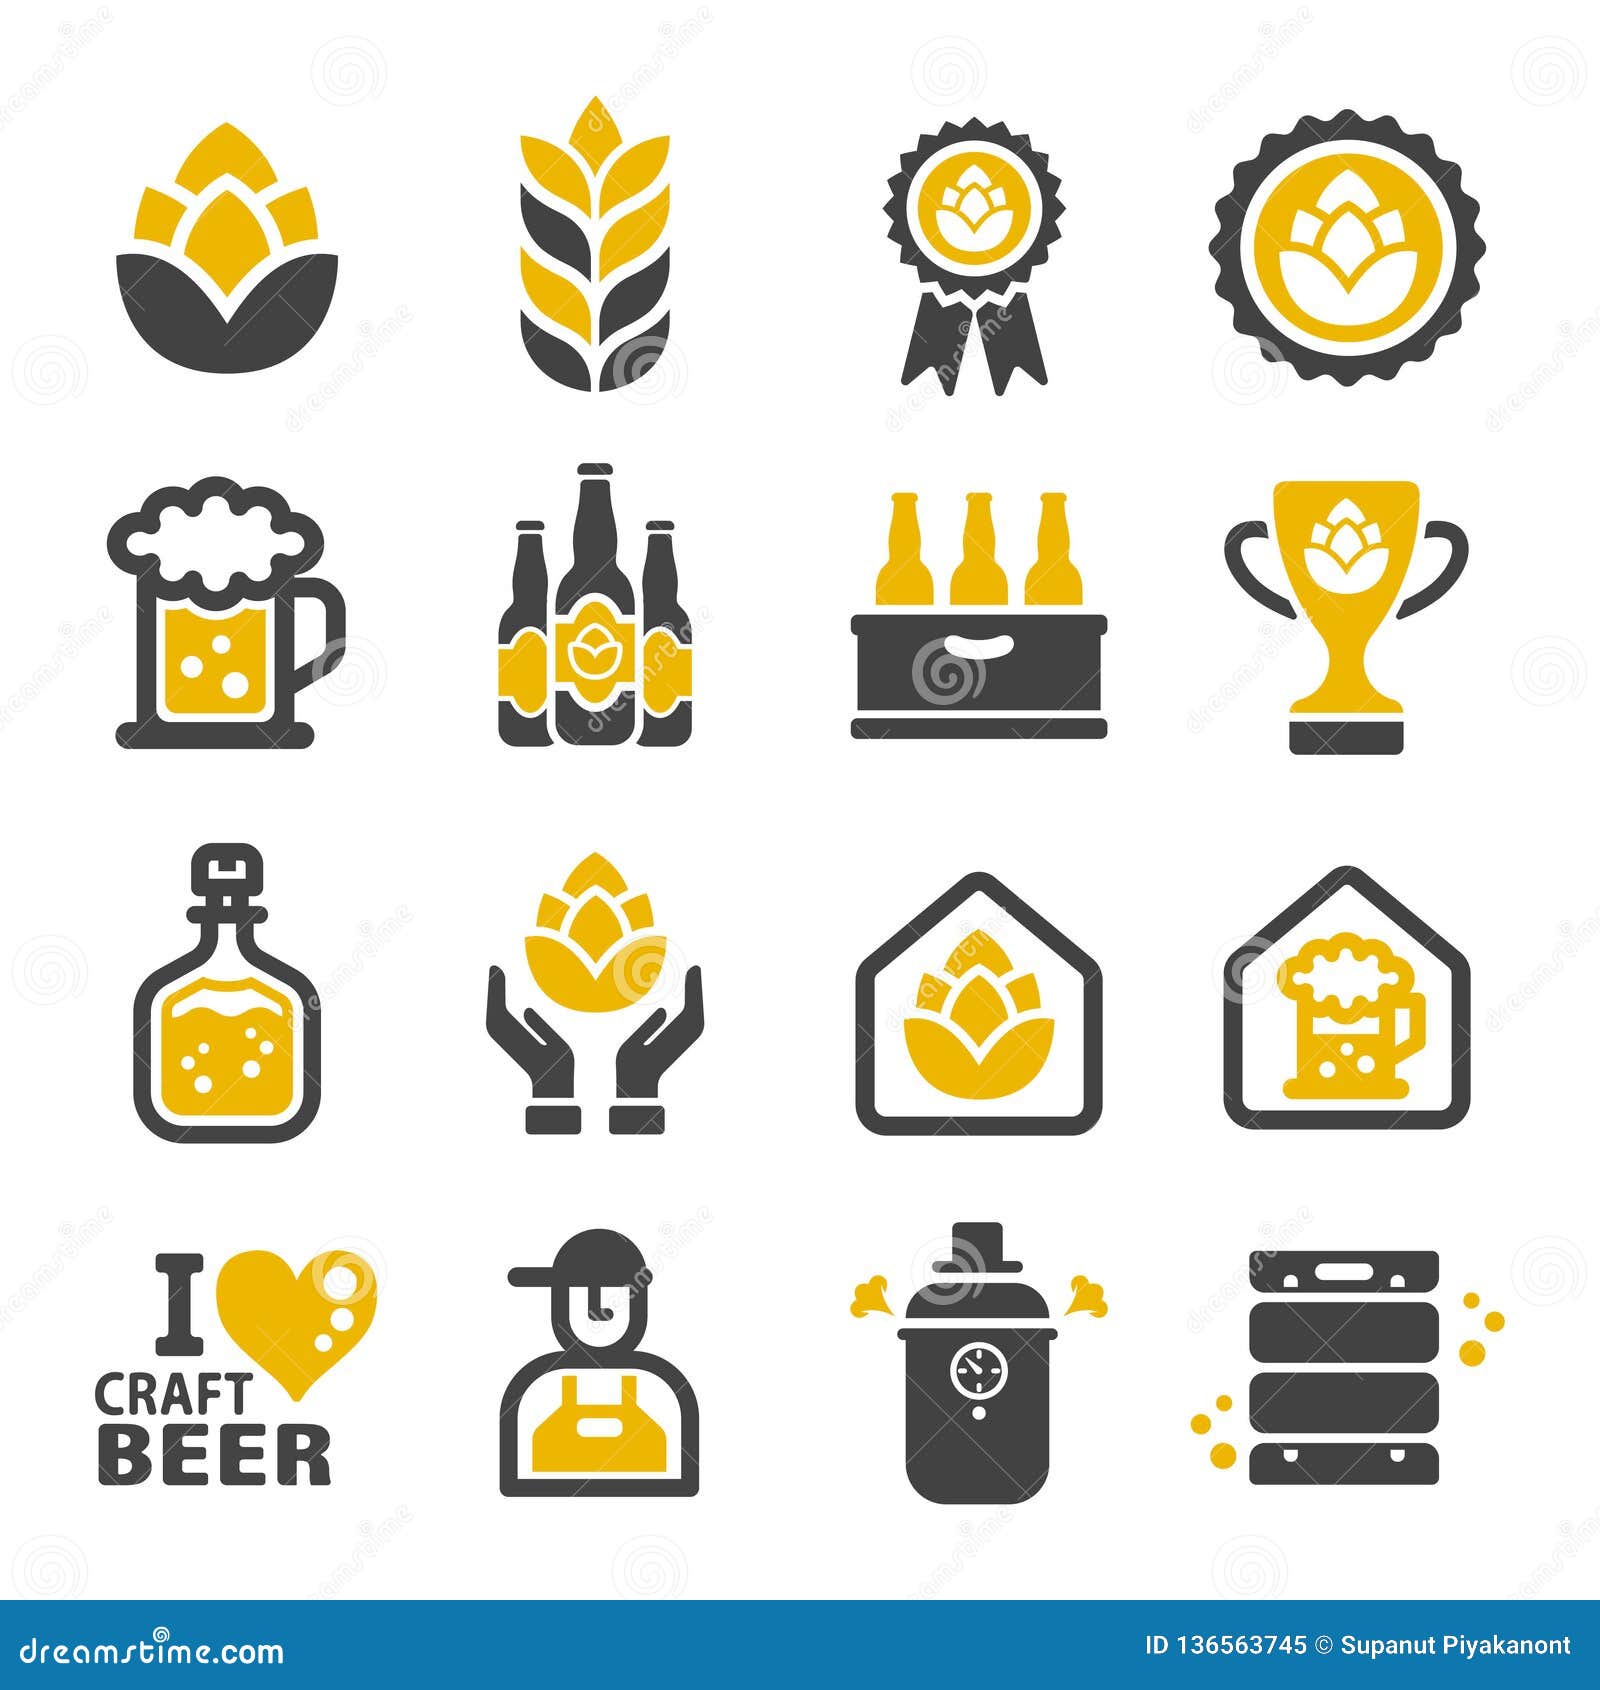 craft beer icon Ã Â¸Â«Ã Â¸Â³Ã Â¸Â°